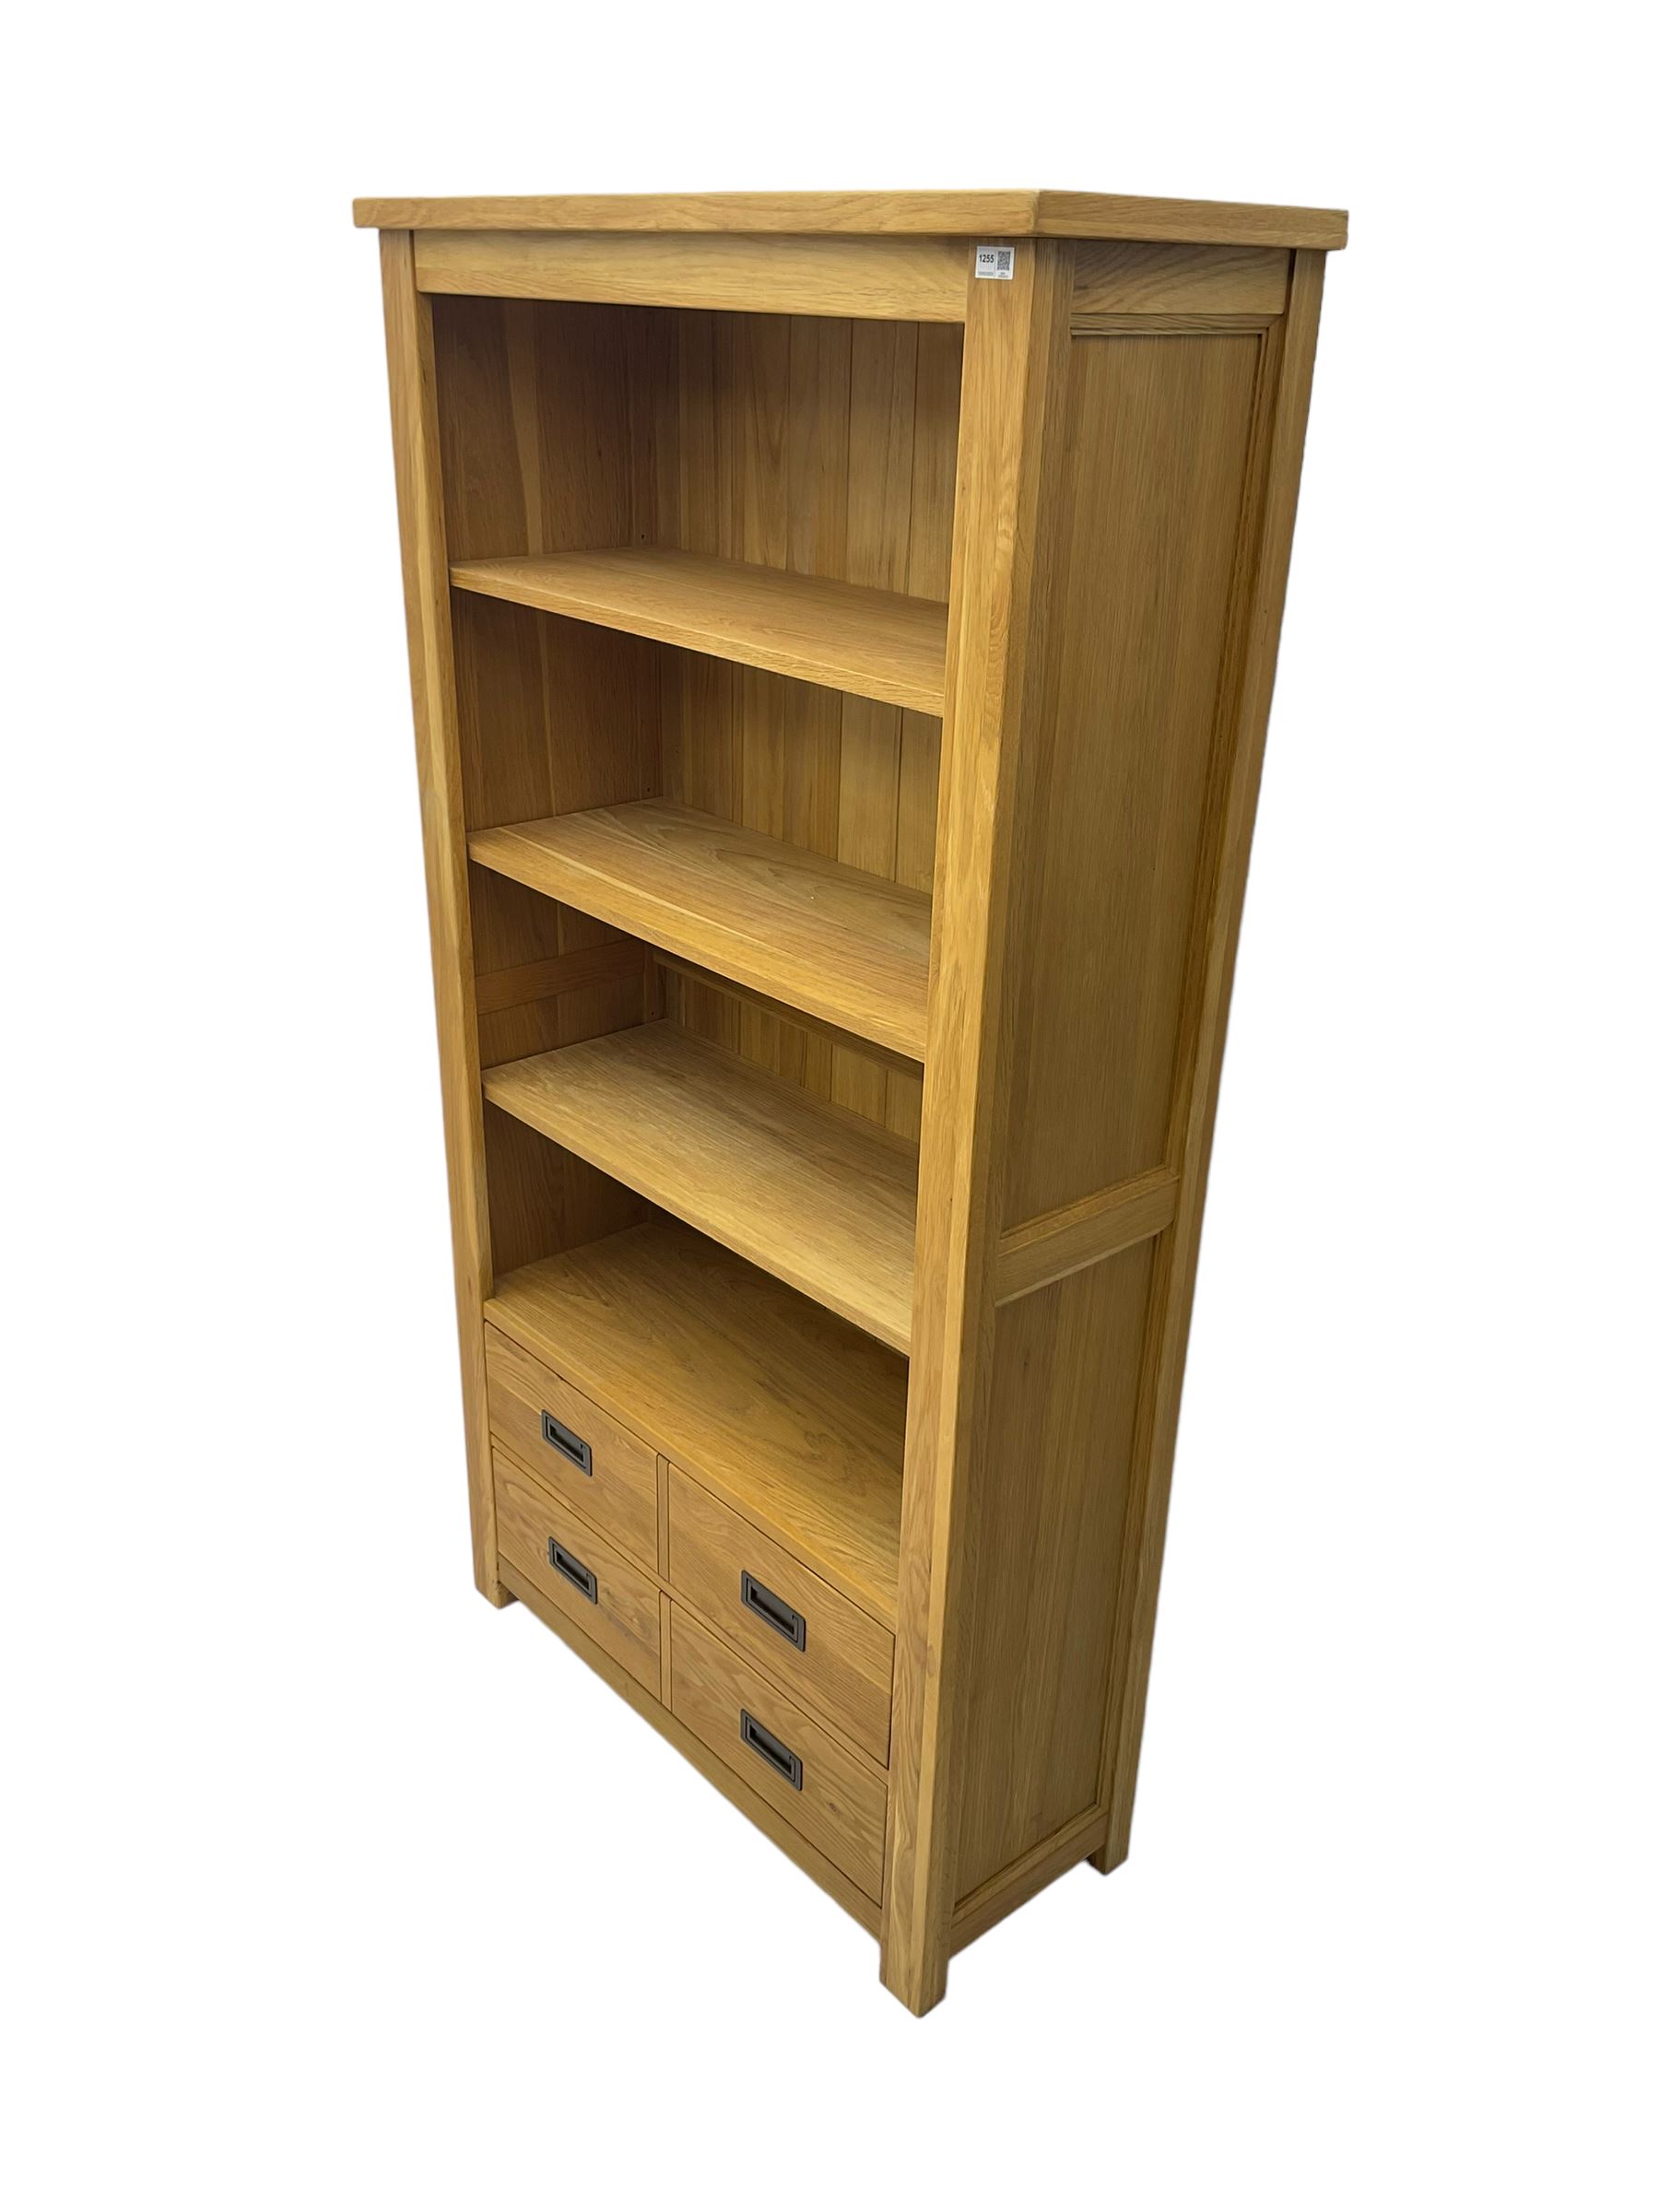 'Galloway' oak open wide bookcase - Image 3 of 7